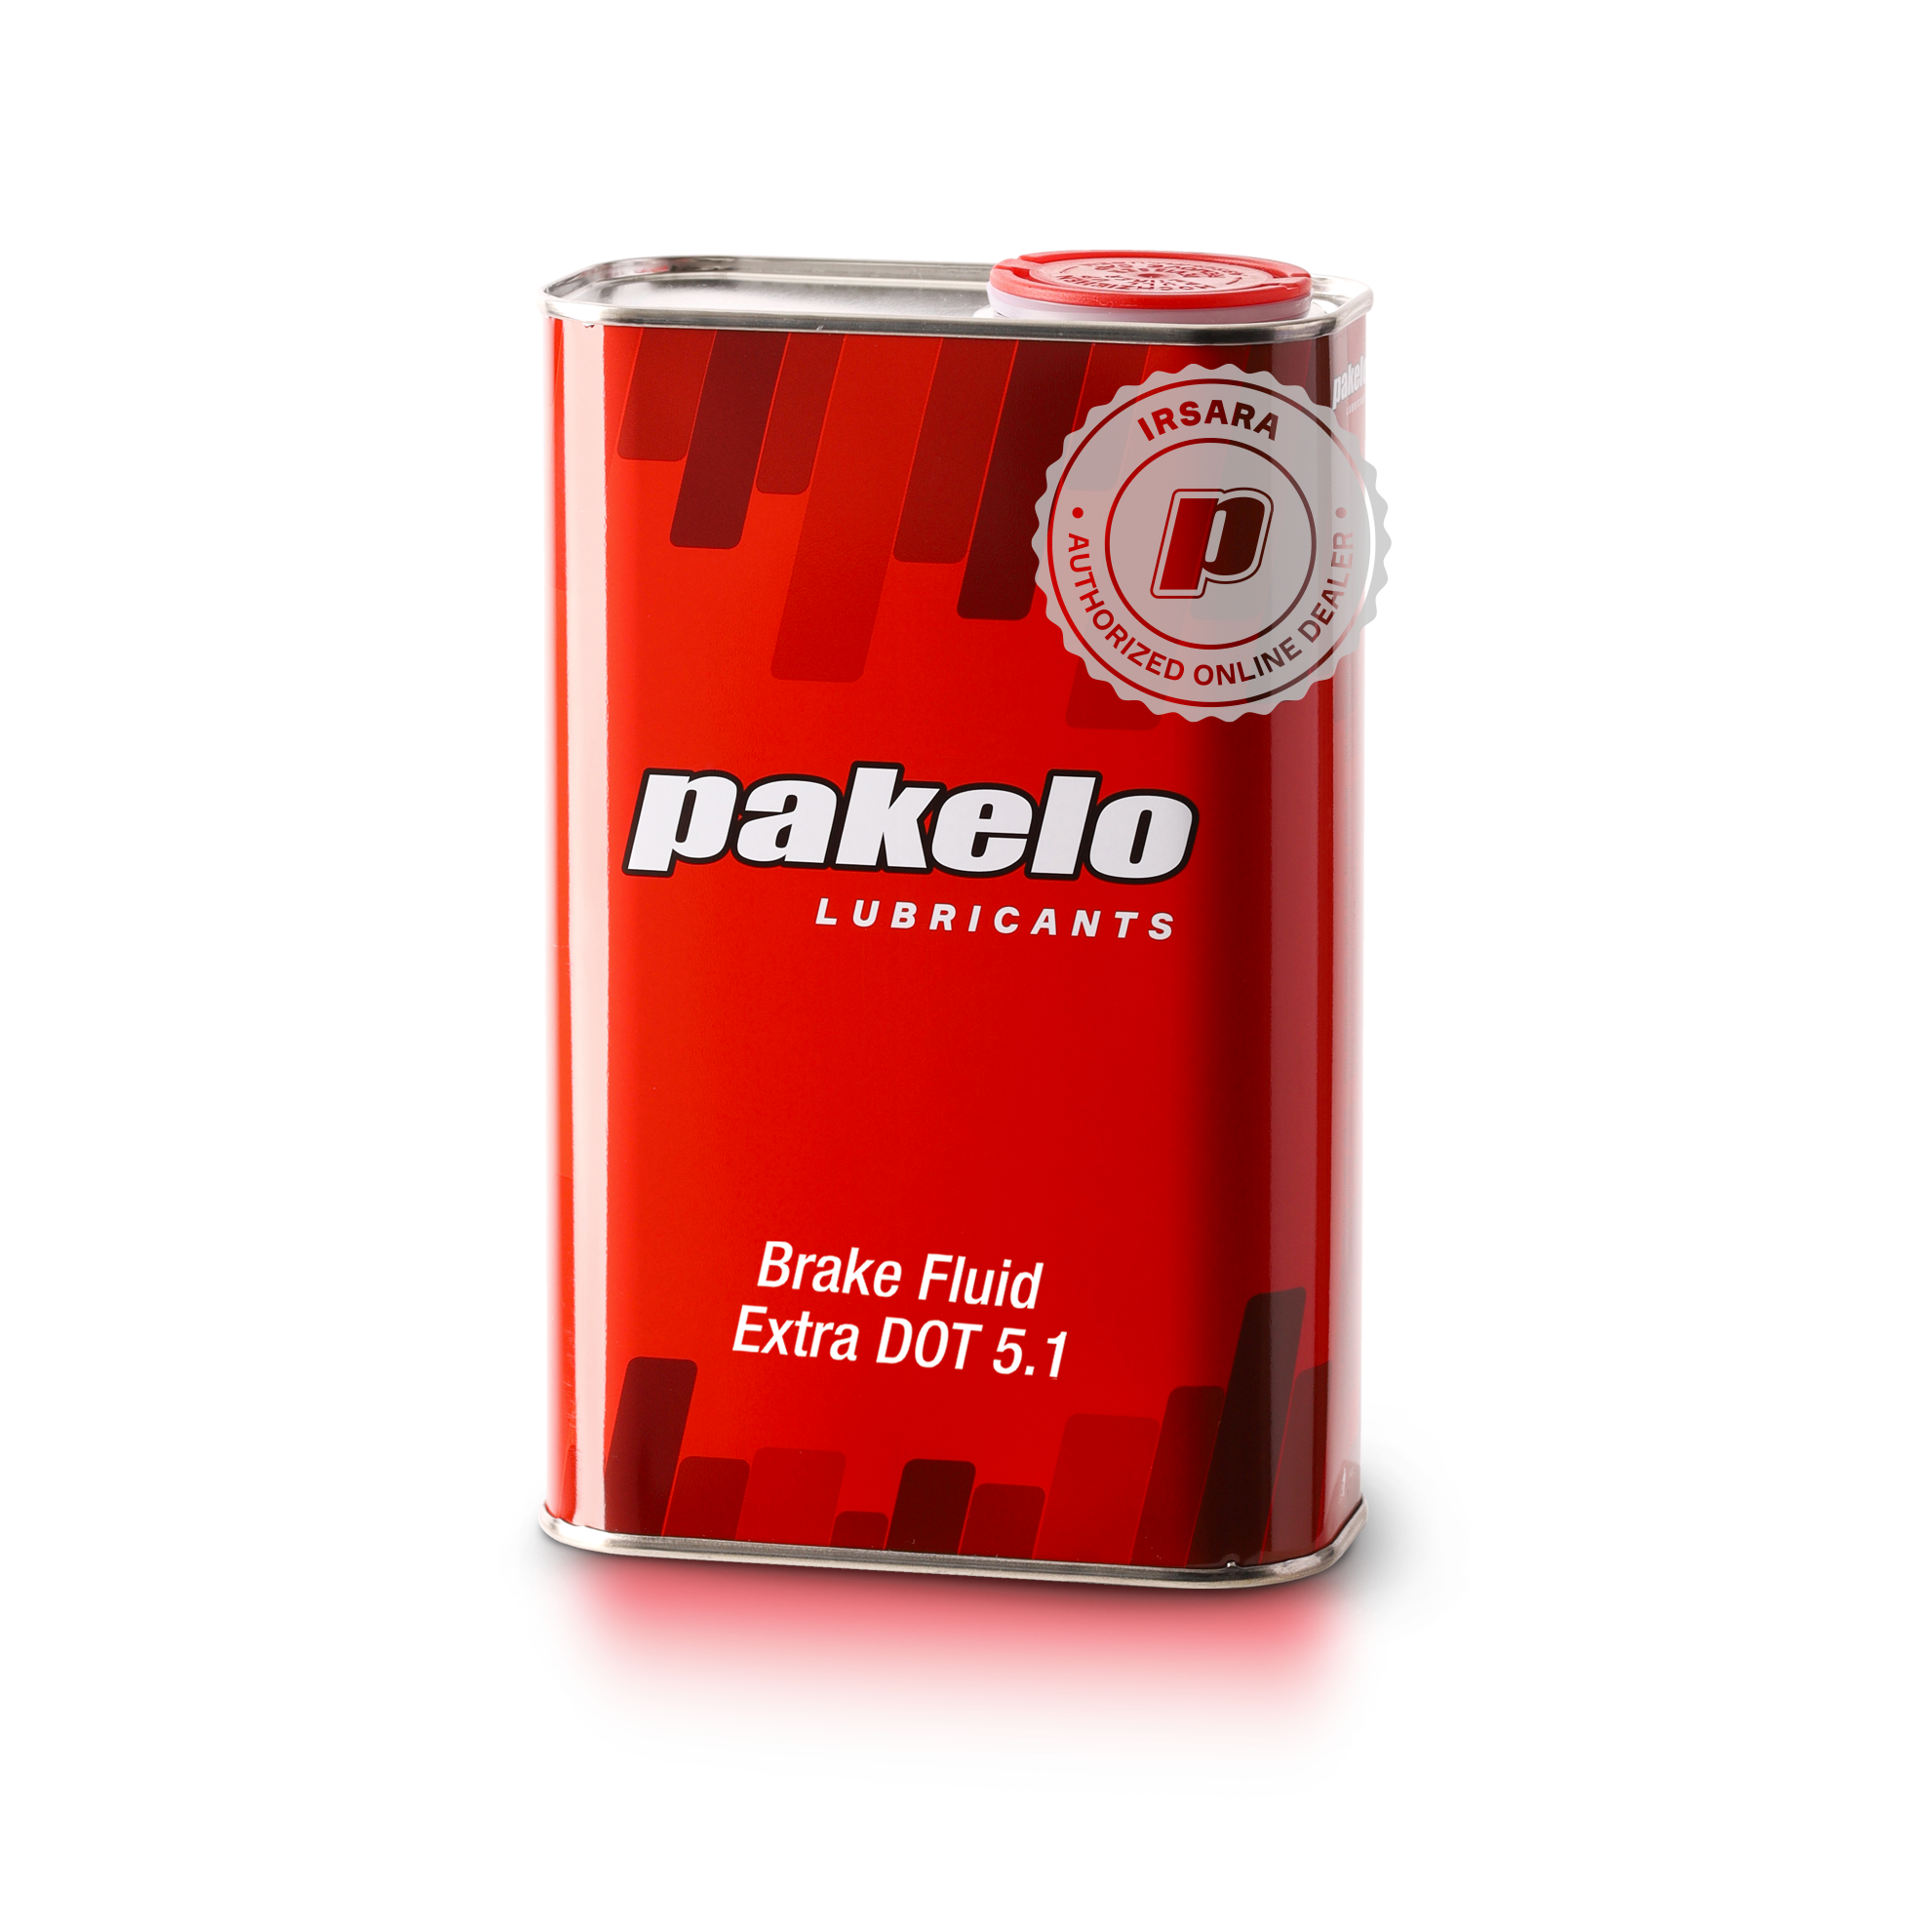 PAKELO BRAKE FLUID EXTRA DOT 5.1 (1 L)